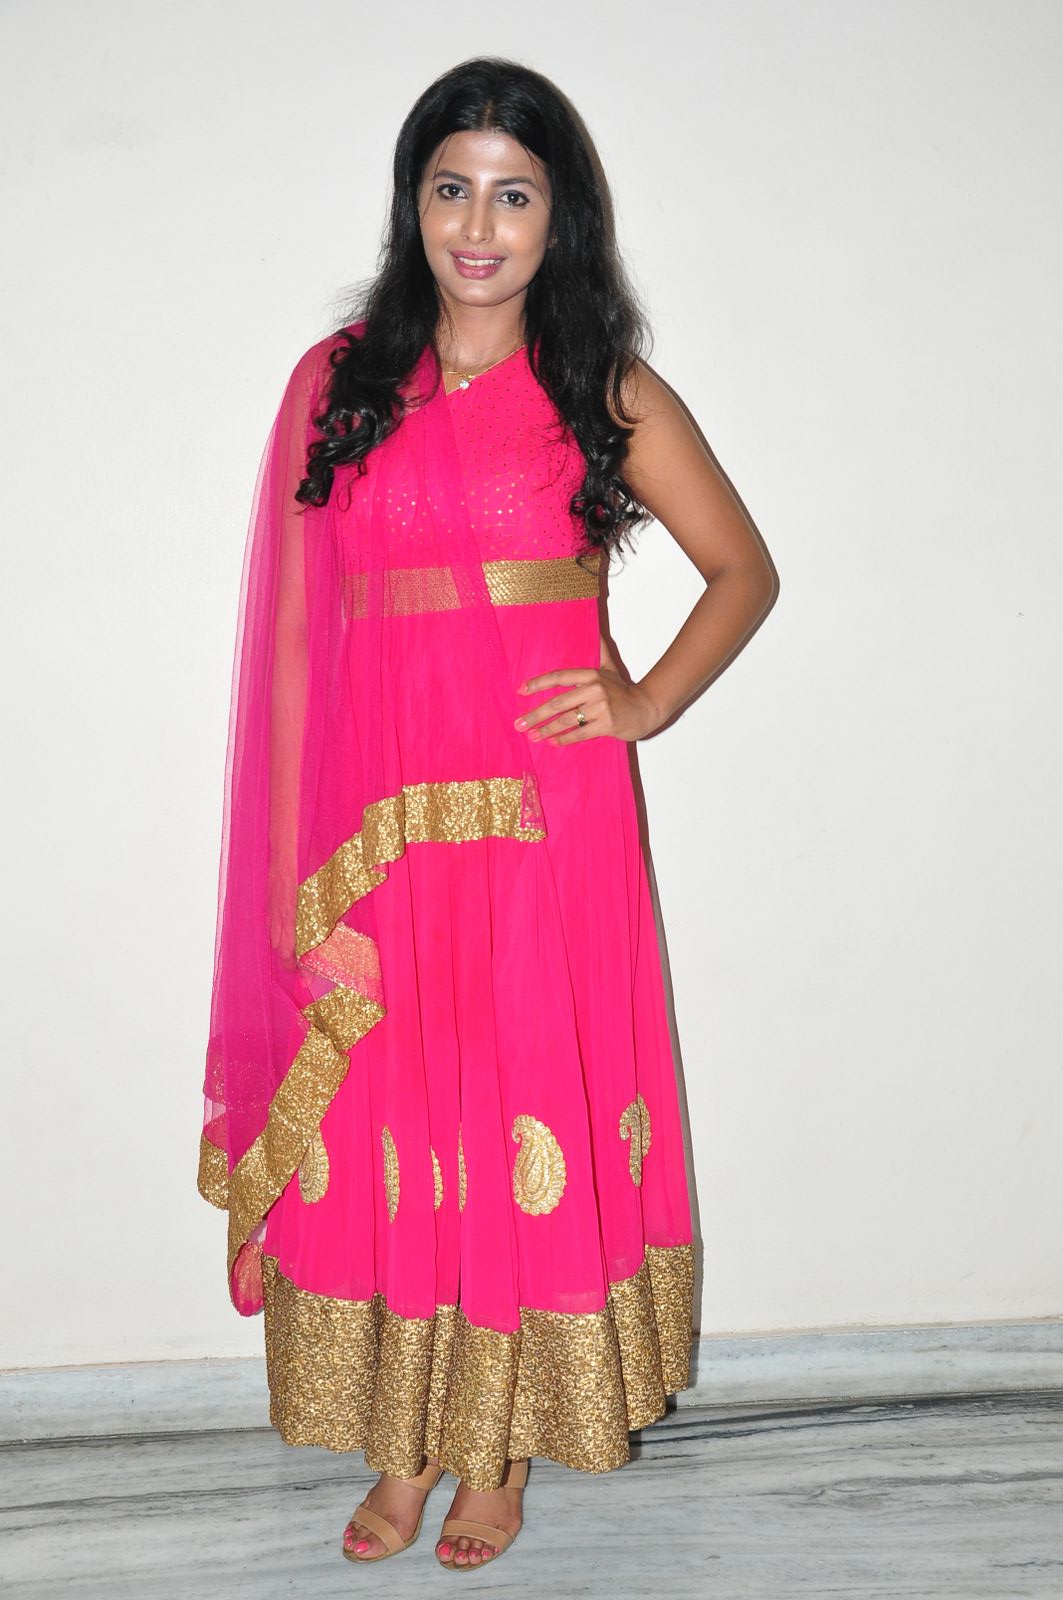 Rajshri Ponnappa Hot Photos In Pink Dress